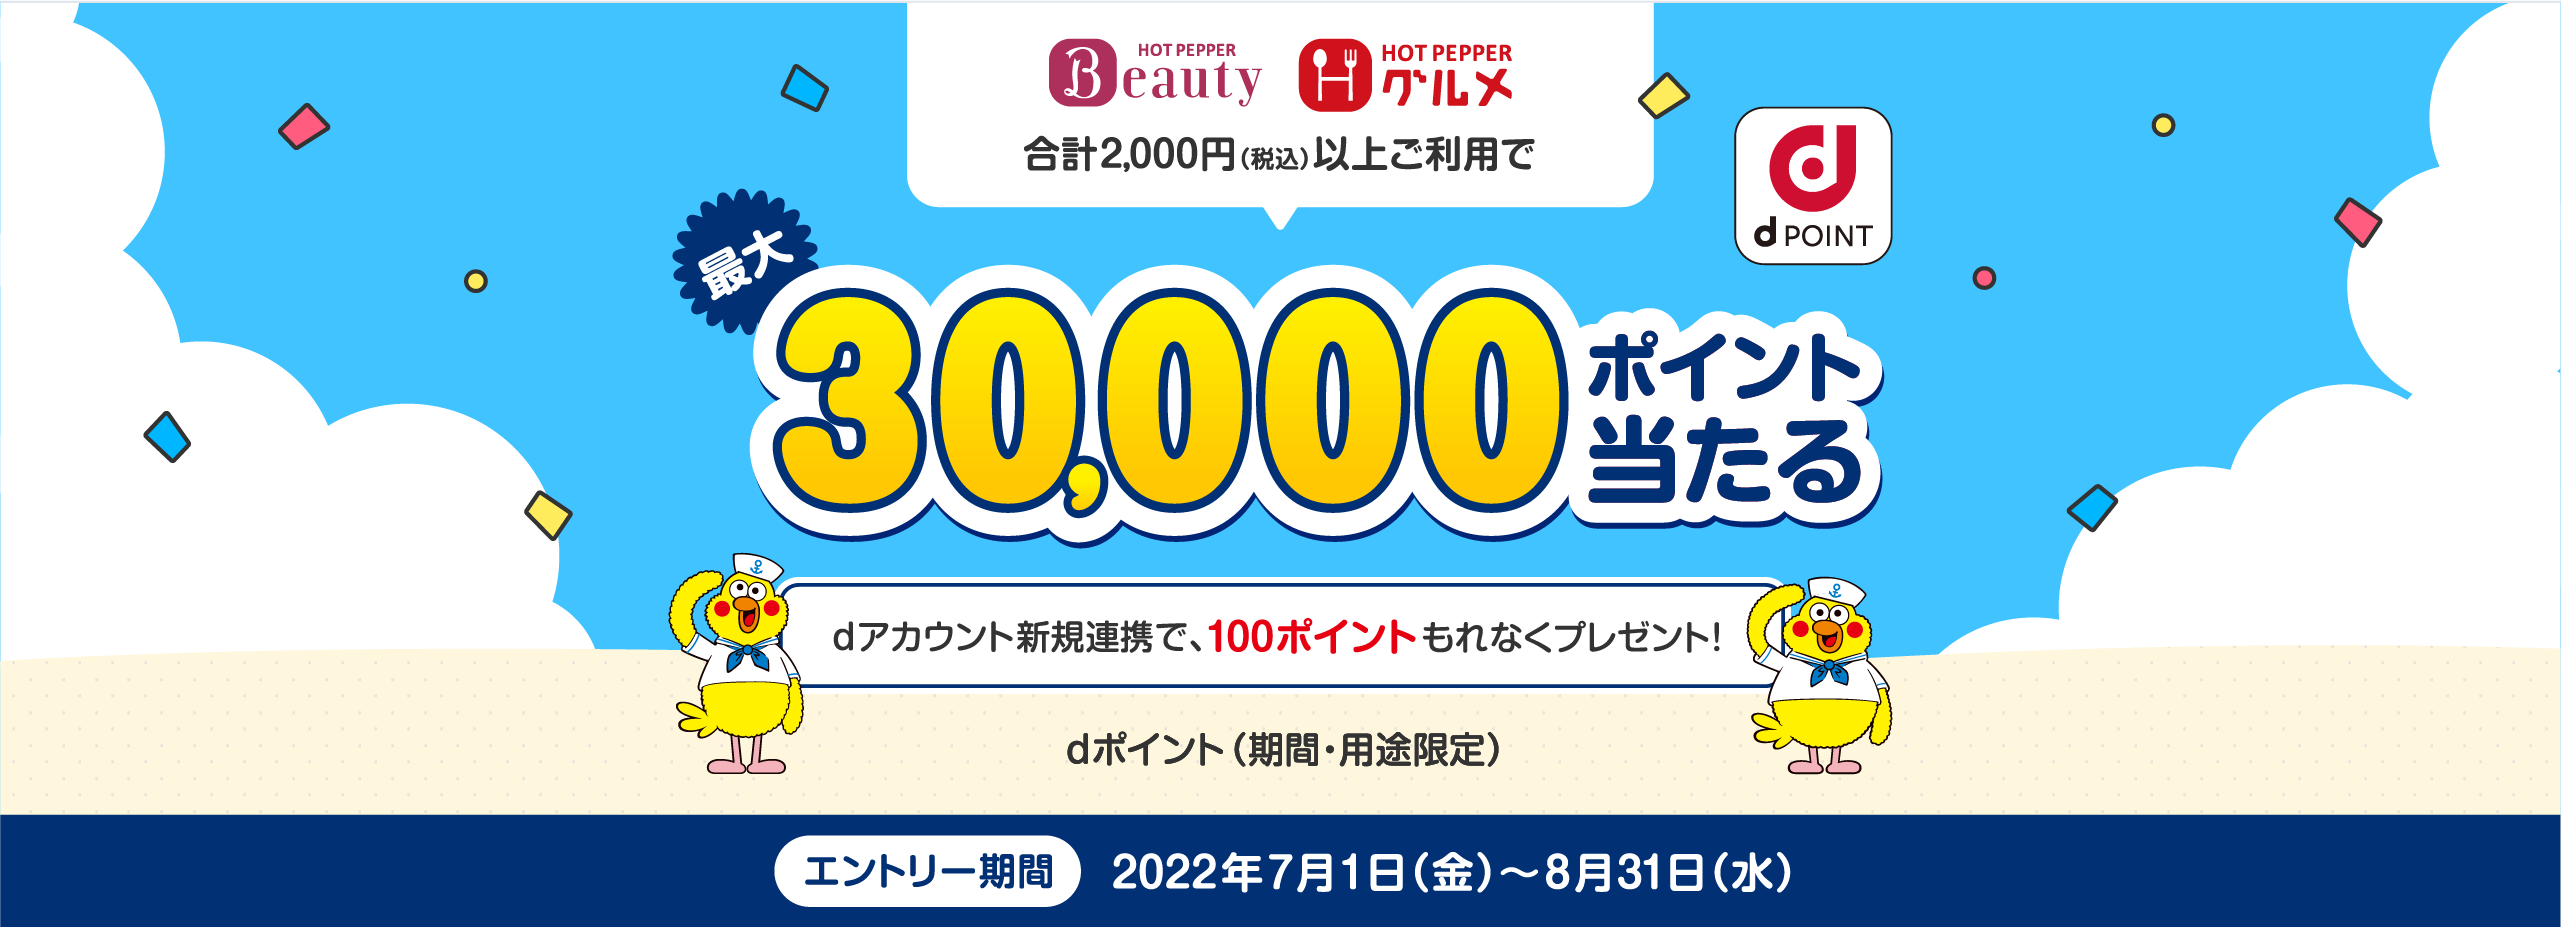 HOT PEPPER Beauty、ホットペッパーグルメで合計2,000円(税込)以上のご利用で、最大30,000ポイント当たる！